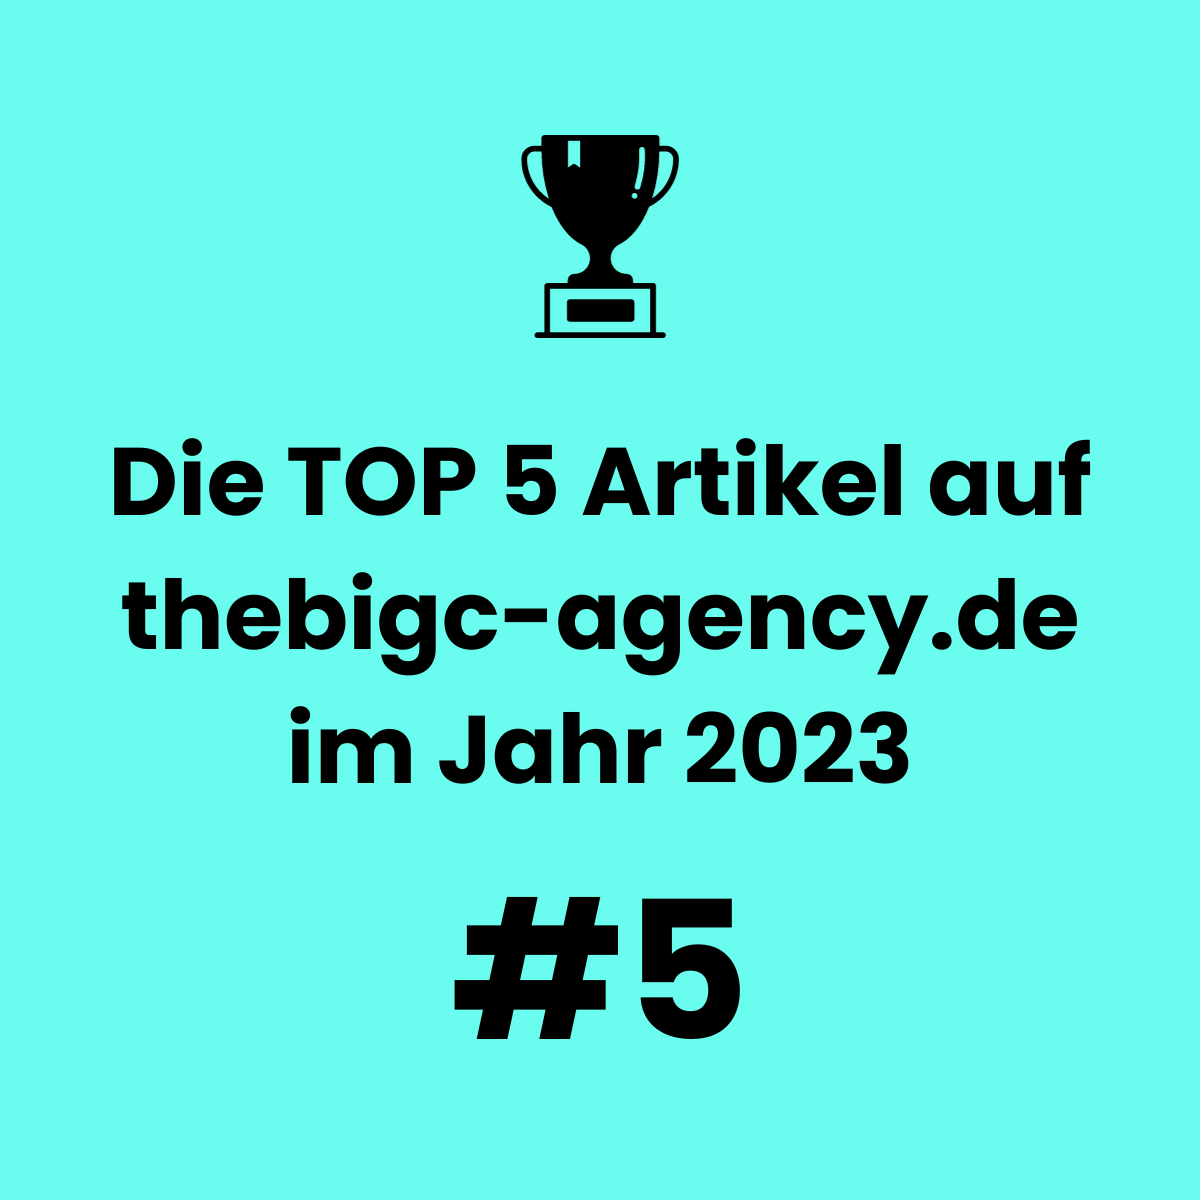 Die Top5 Artikel von THE BIG C Agency in 2023